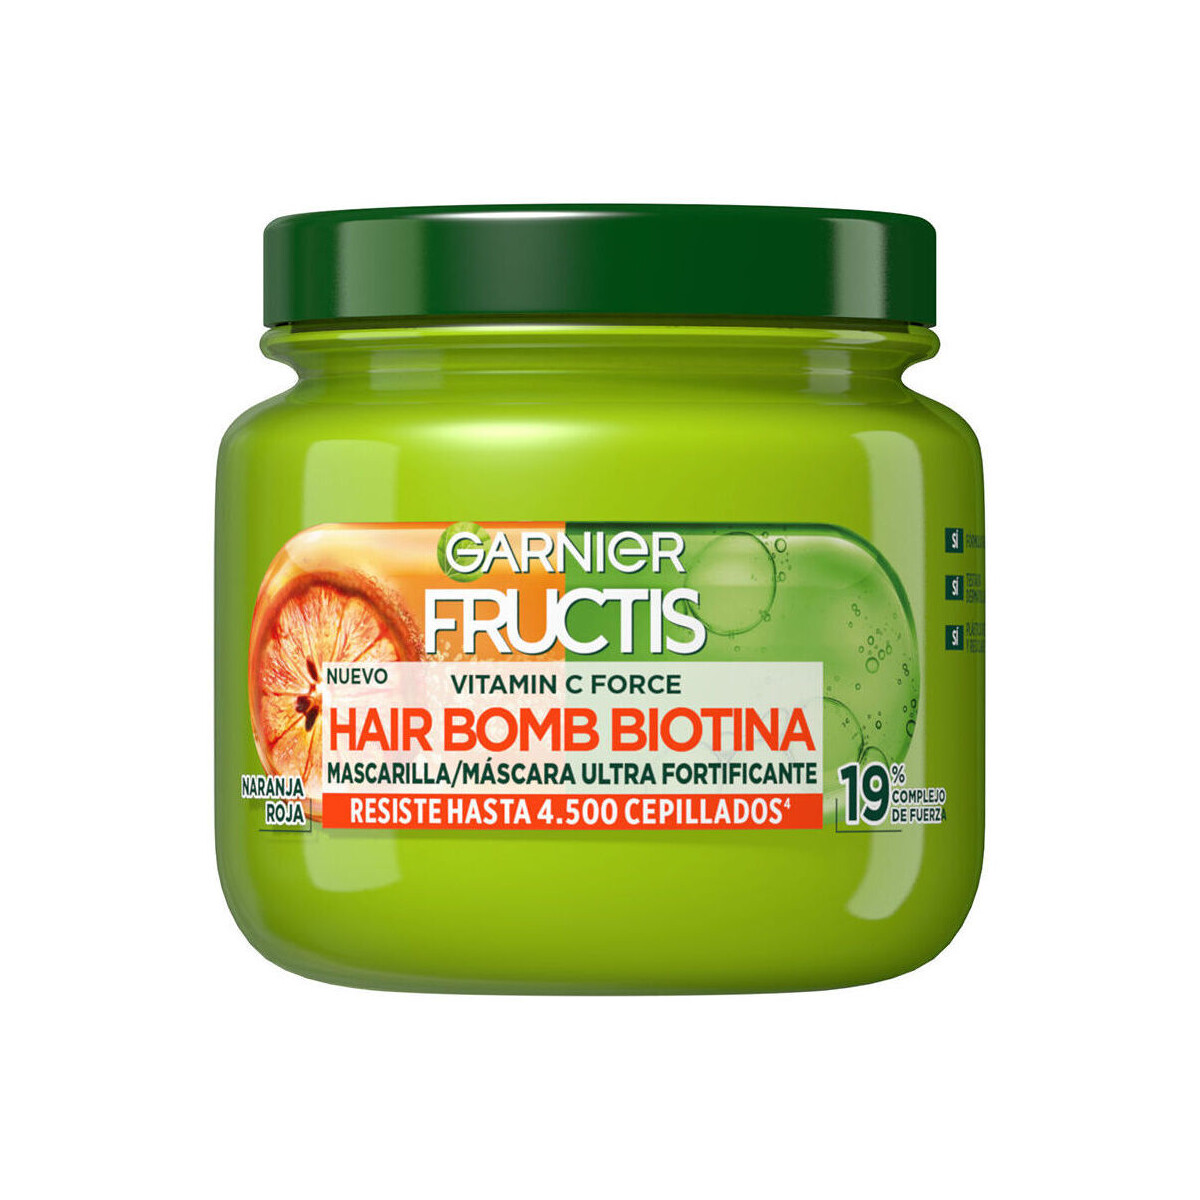 Beauté Soins & Après-shampooing Garnier Fructis Vitamin Force Masque Biotine Bombe Capillaire 